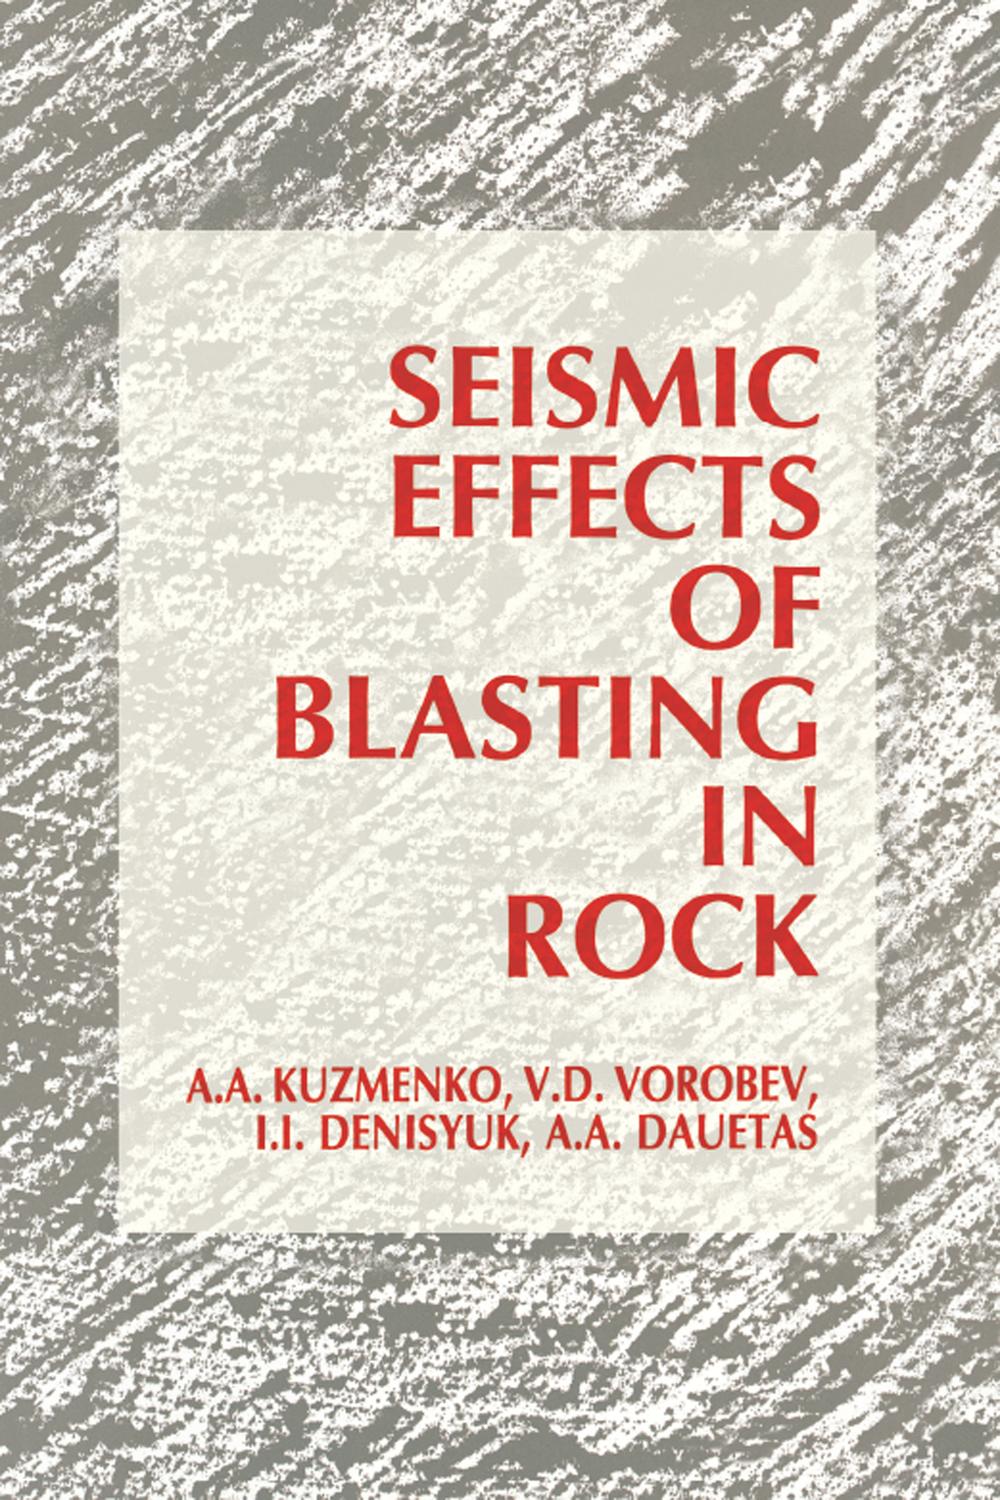 Seismic Effects of Blasting in Rock - A.A. Dauetas